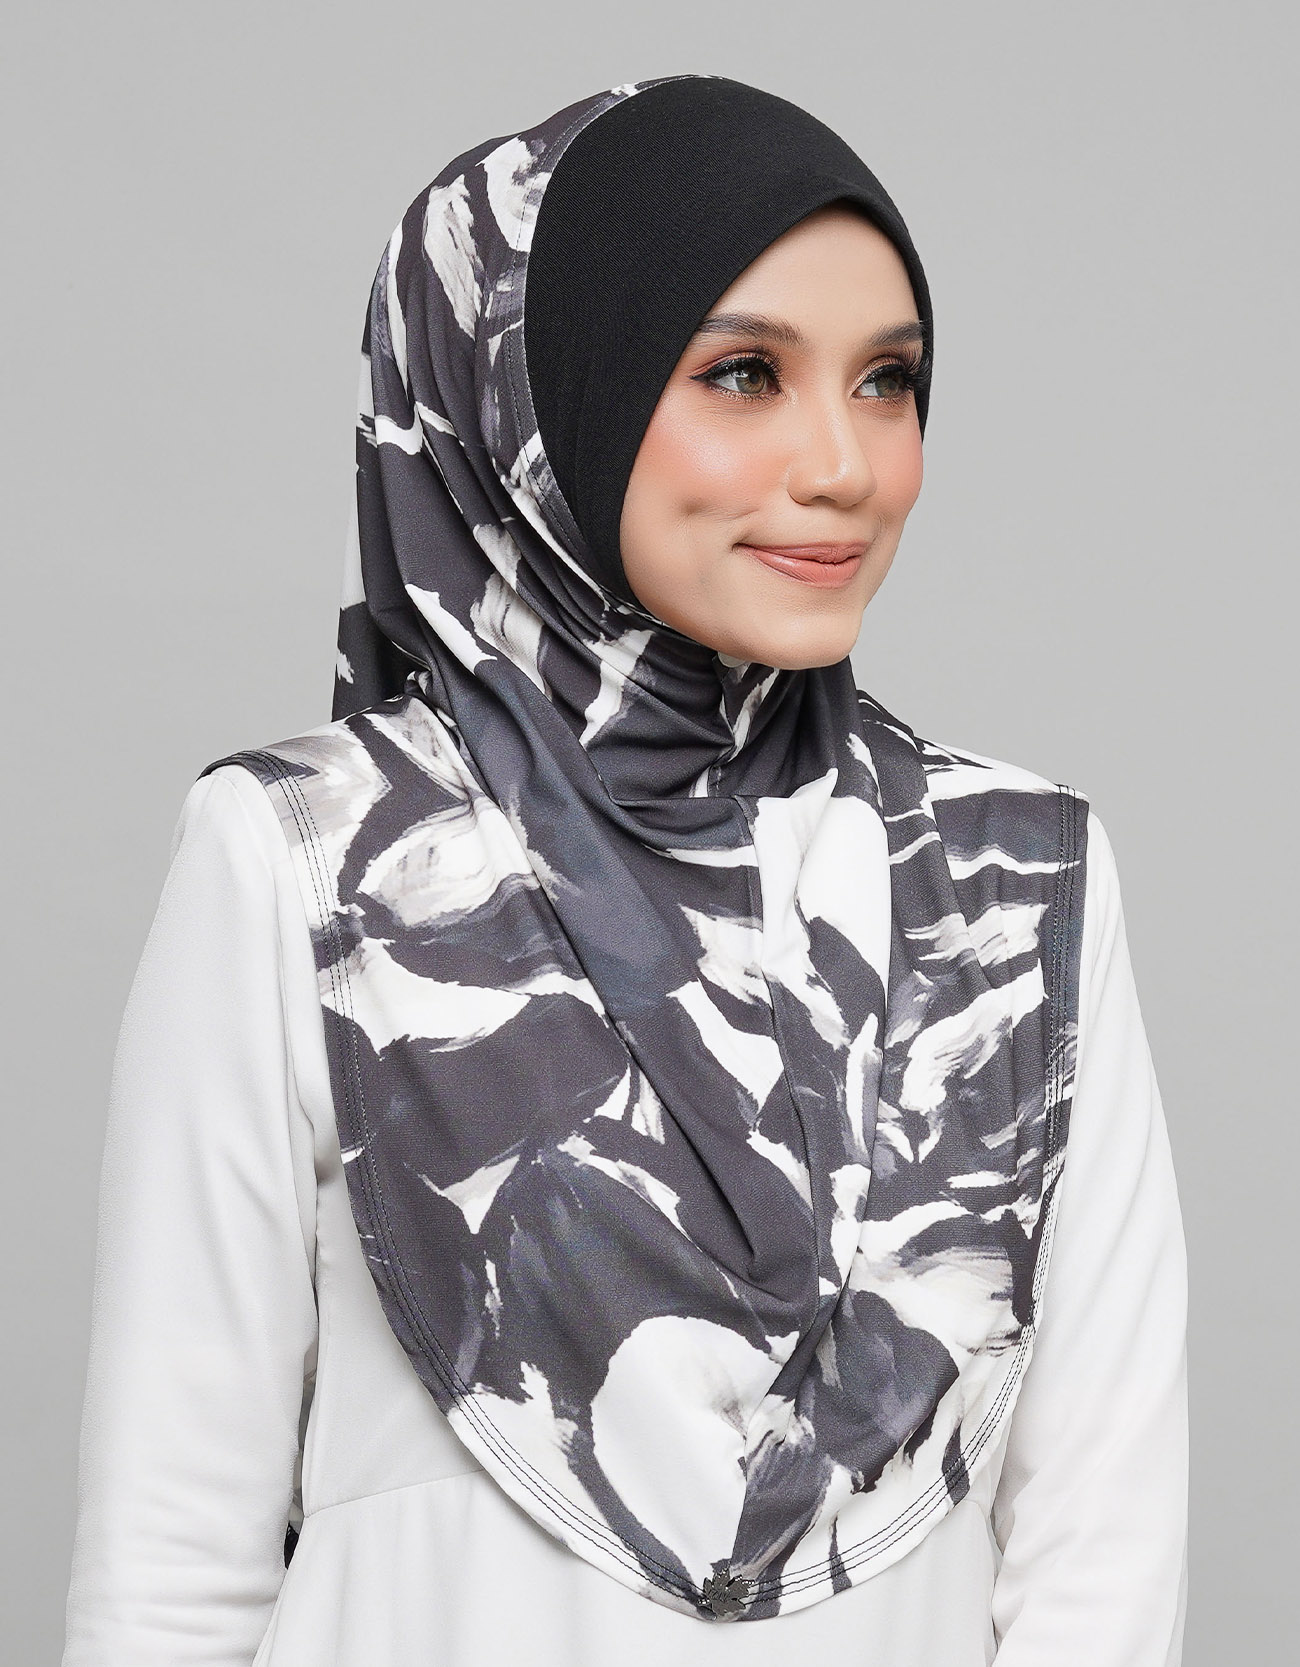 Express Hijab Damia Signature 01 - Black Edition&w=300&zc=1